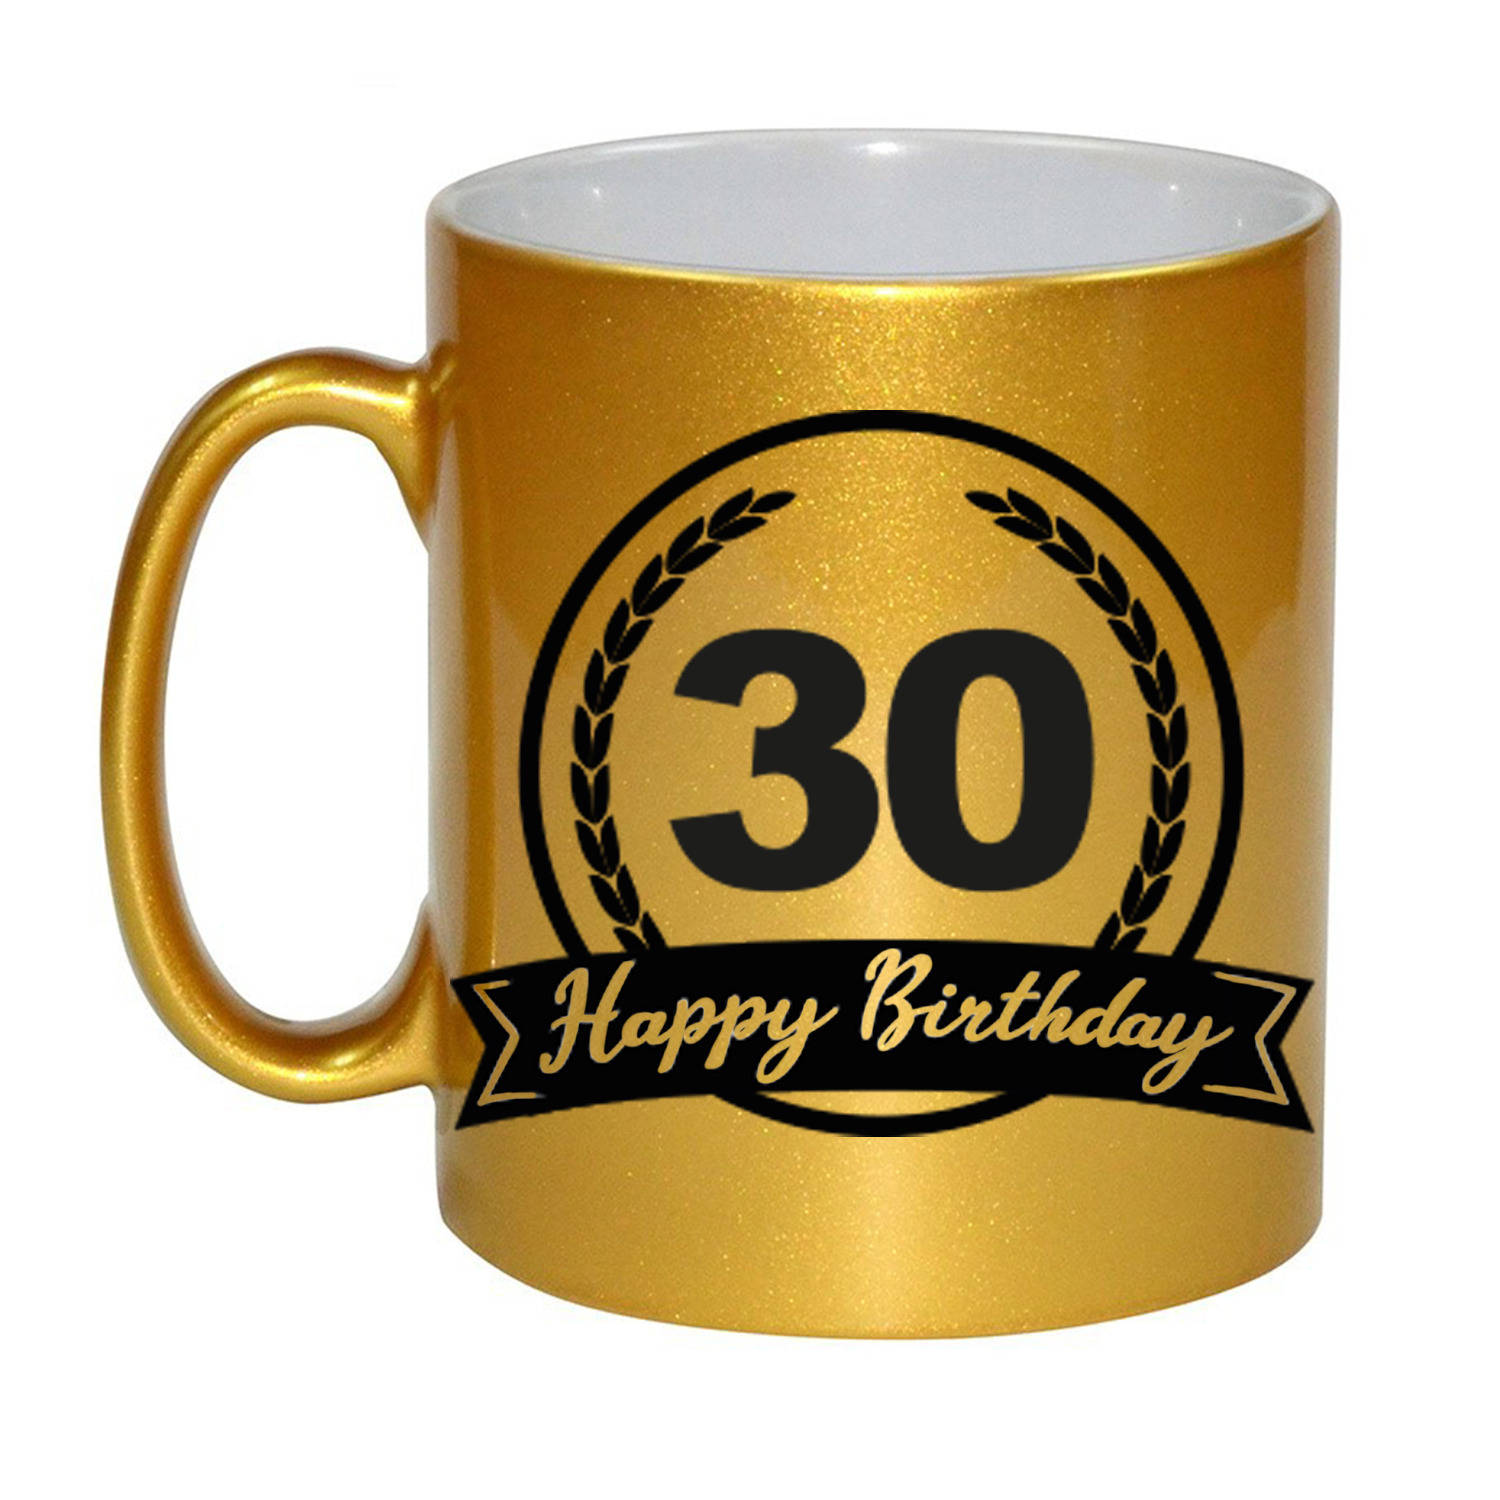 Happy Birthday 30 years gouden cadeau mok-beker met wimpel 330 ml